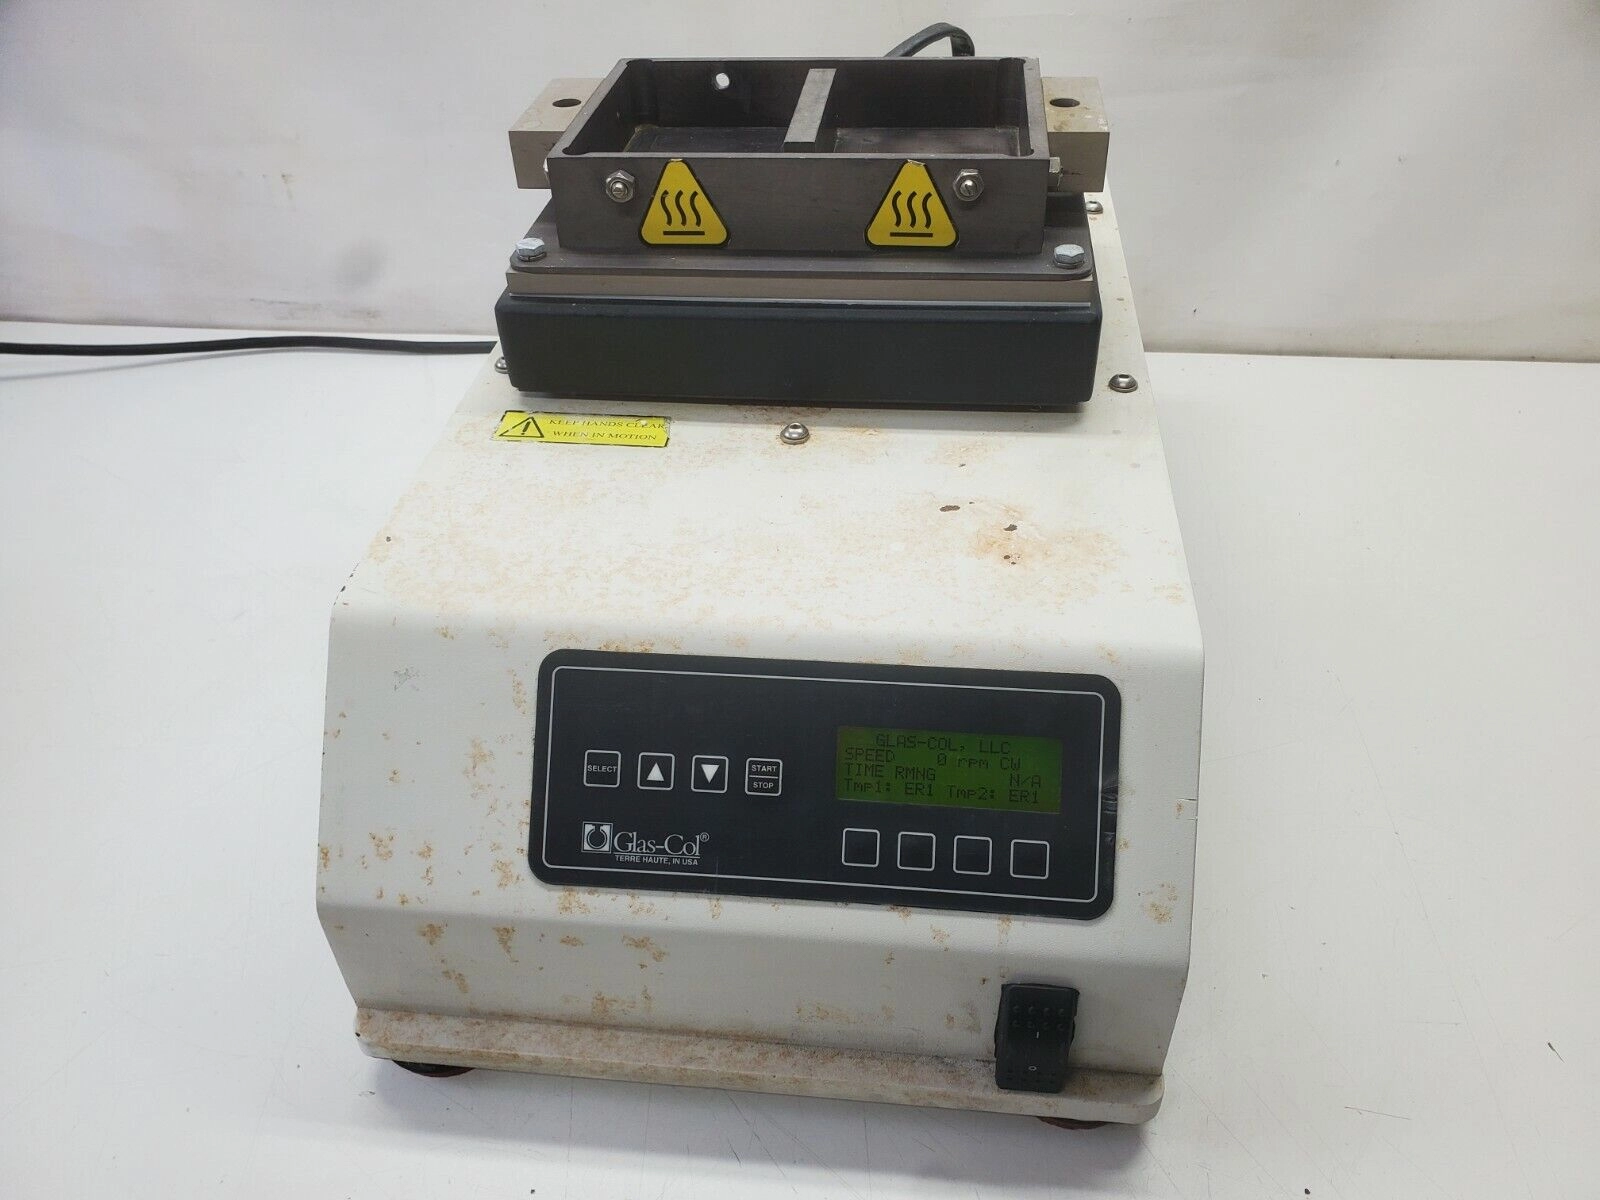 Glas-Col 099A Heated Benchtop Digital Pulse Mixer 